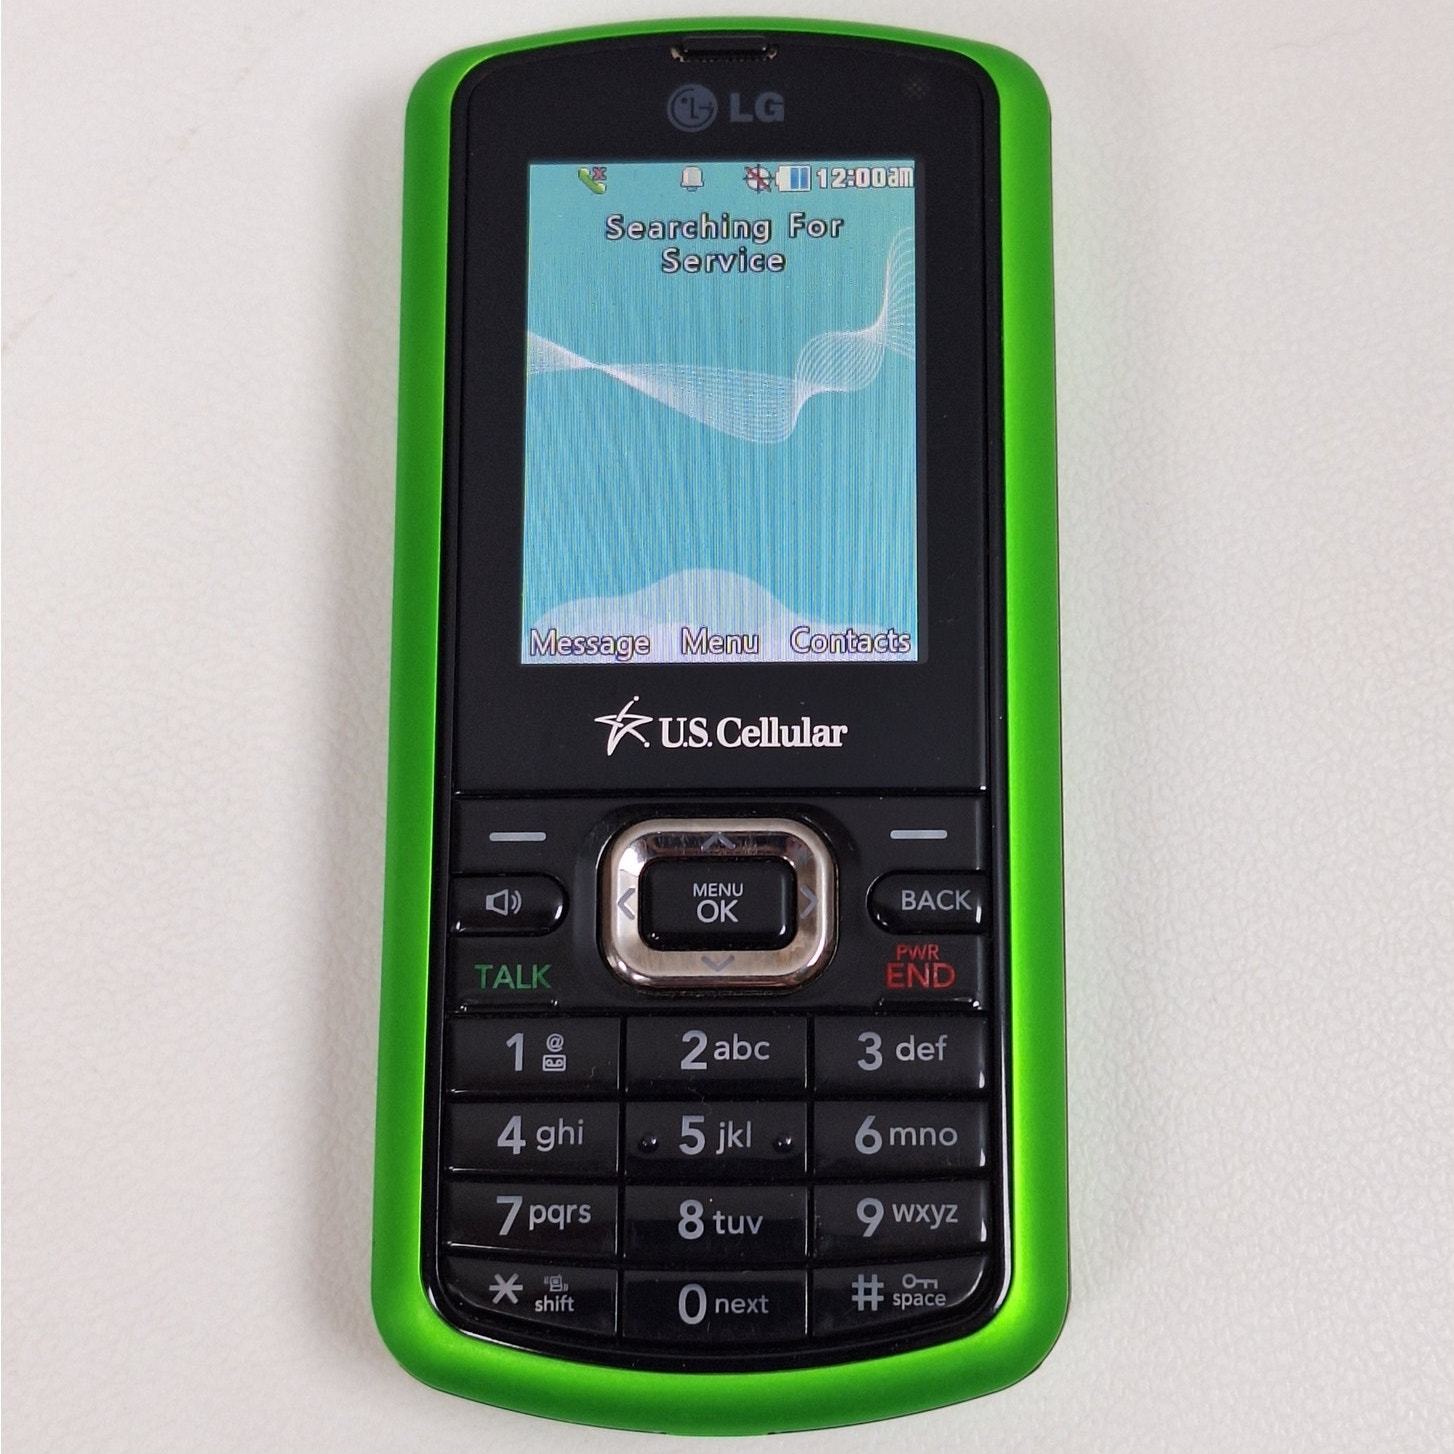 LG Banter UX265 Green QWERTY Keyboard Slide Phone (US Cellular) - $69.99